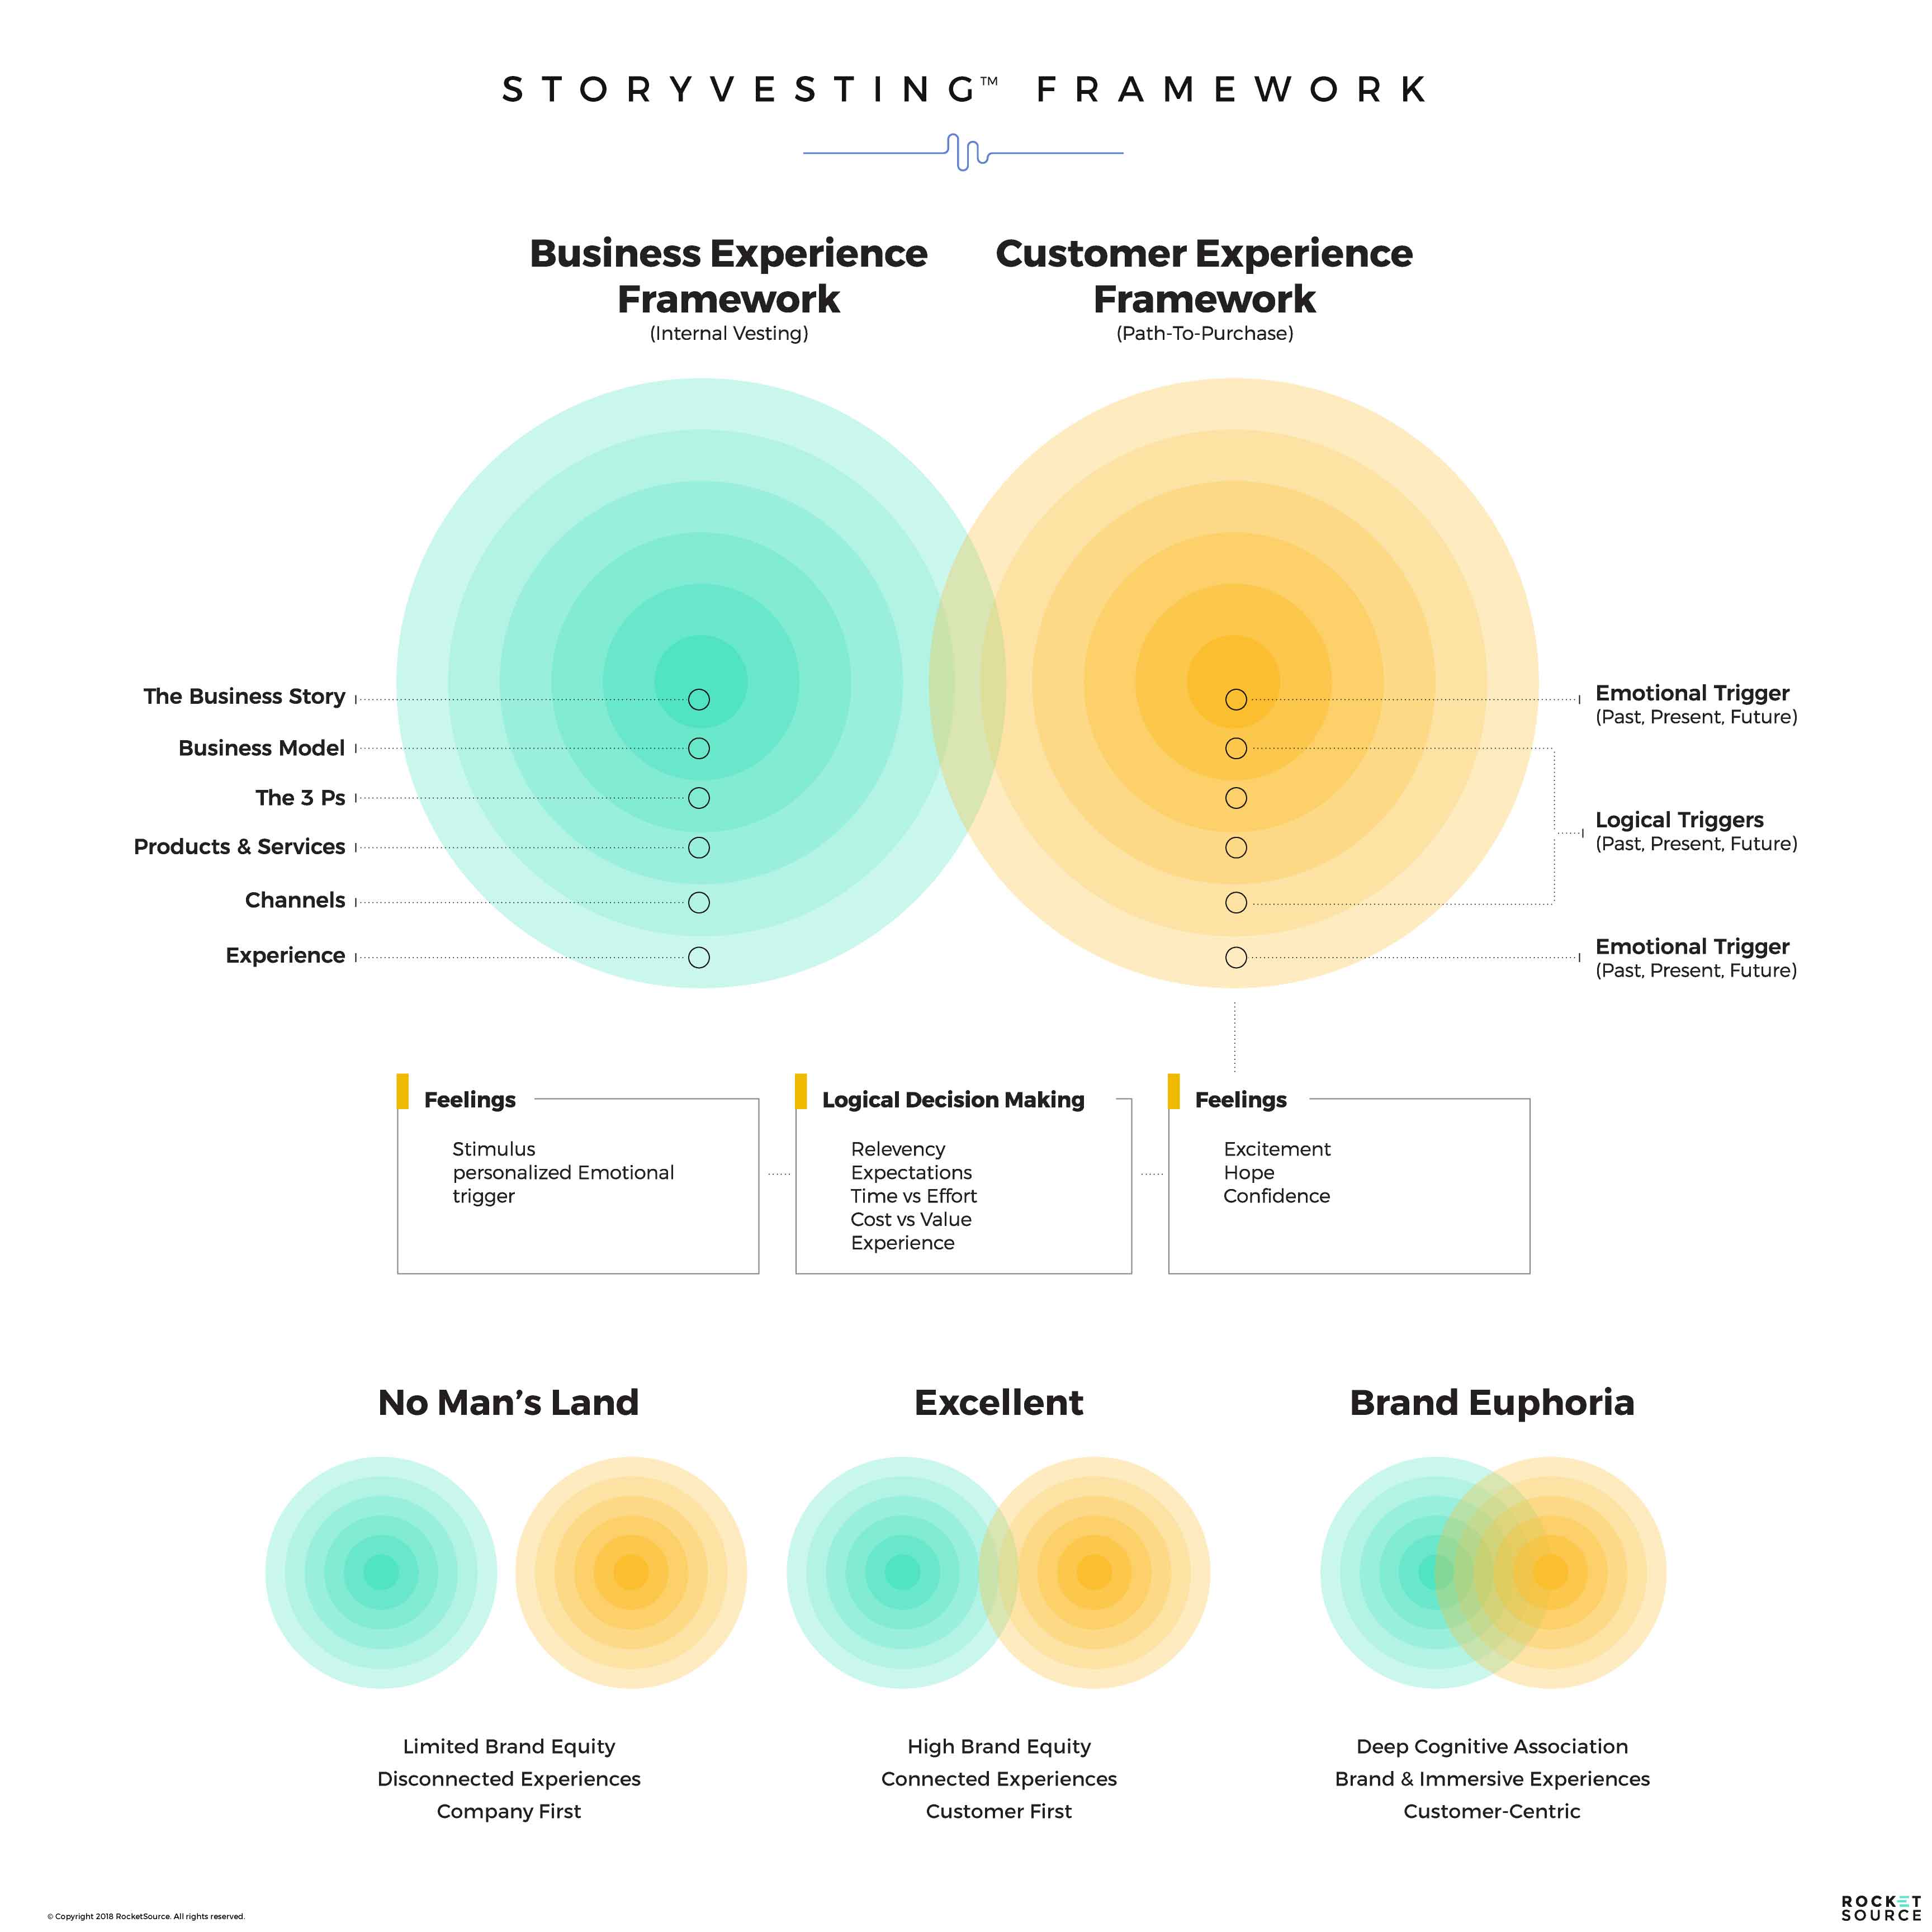 Revenue Acceleration Through the StoryVesting Framework